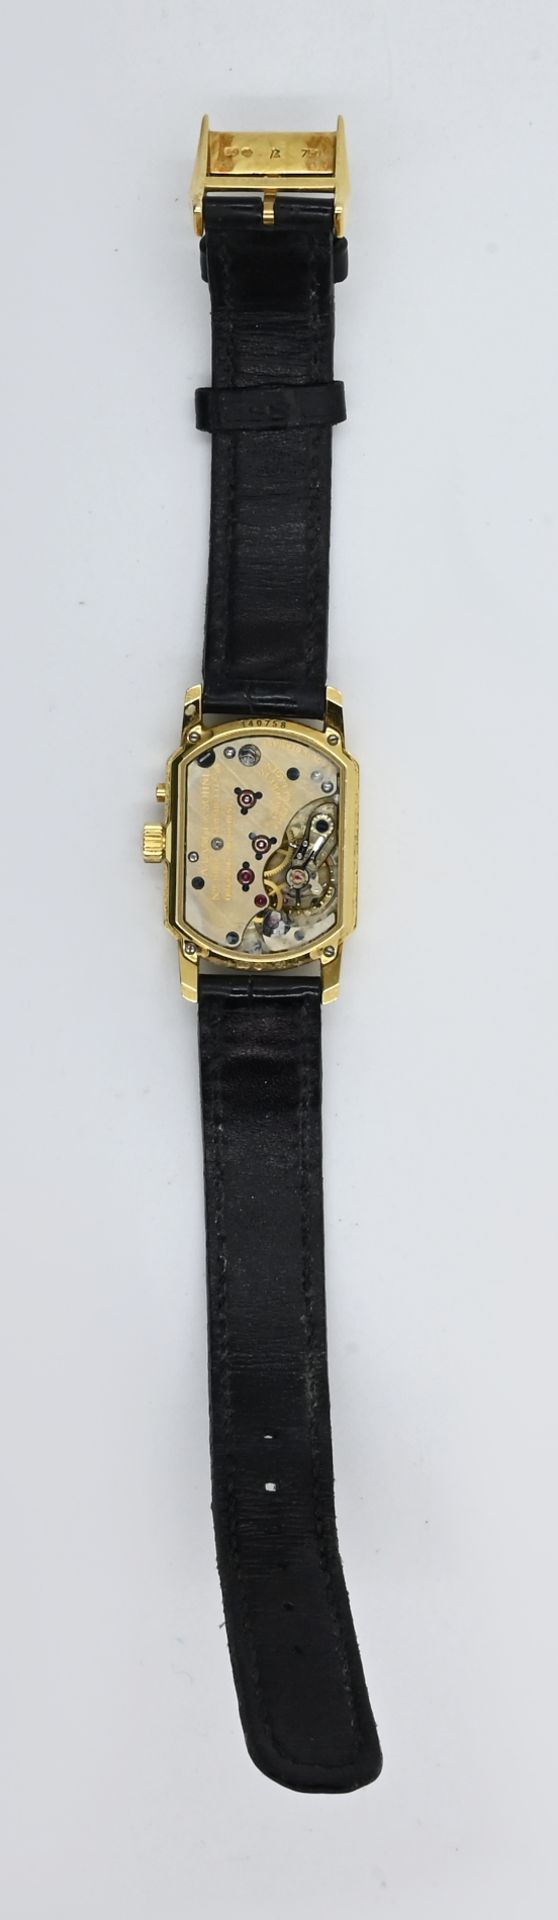 1 Damenarmbanduhr A. LANGE & SÖHNE GG 18ct., mit Original-Lederarmband, Uhr läuft an, Originalschatu - Image 2 of 3